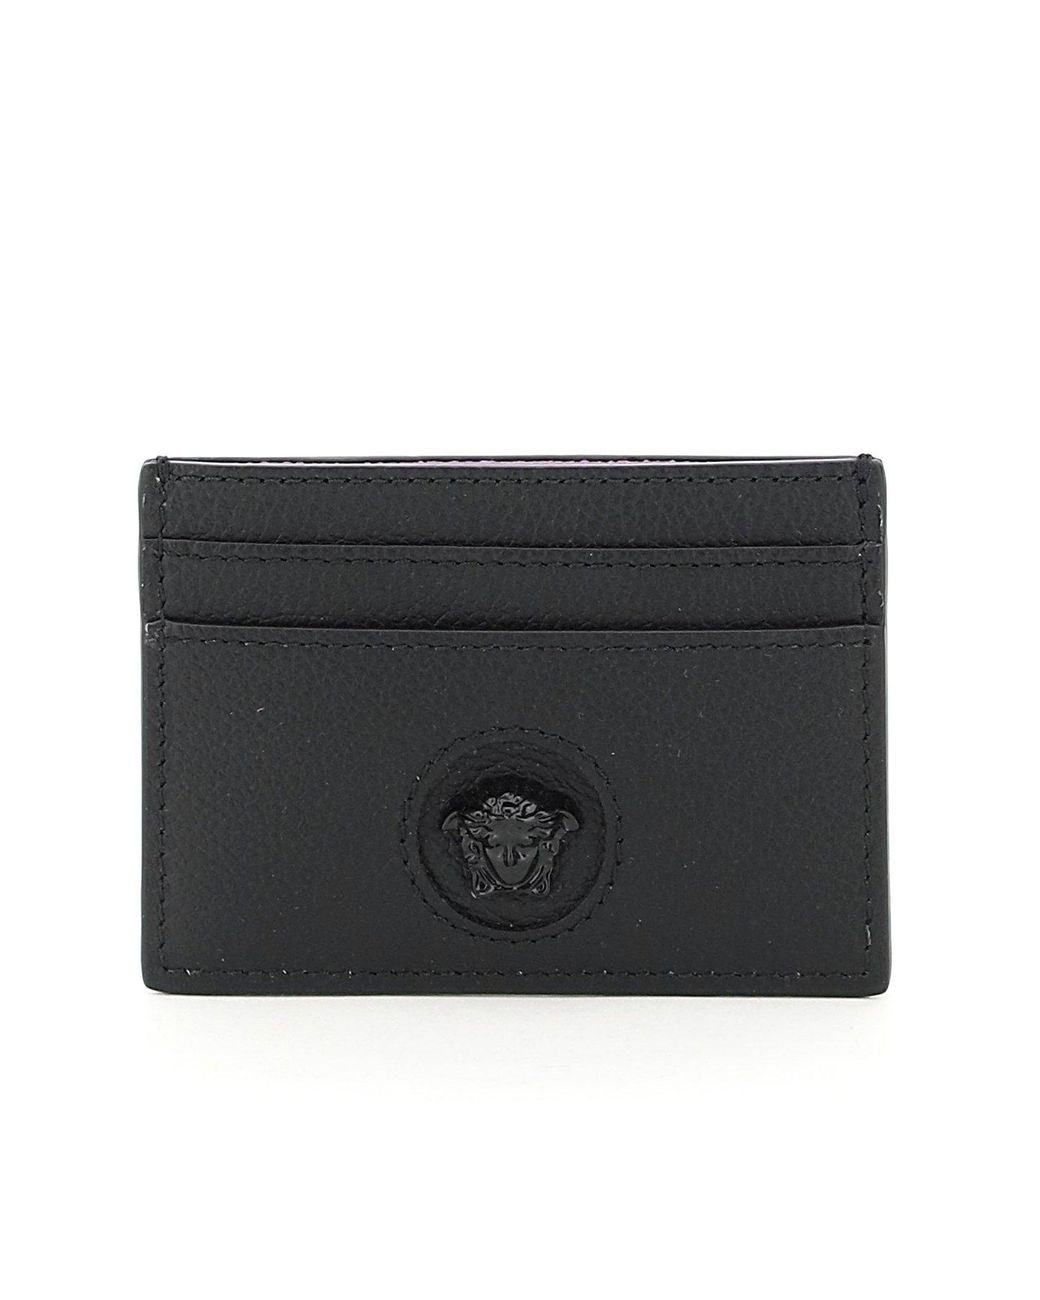 Versace Medusa Leather Card Holder in Black - Save 22% - Lyst